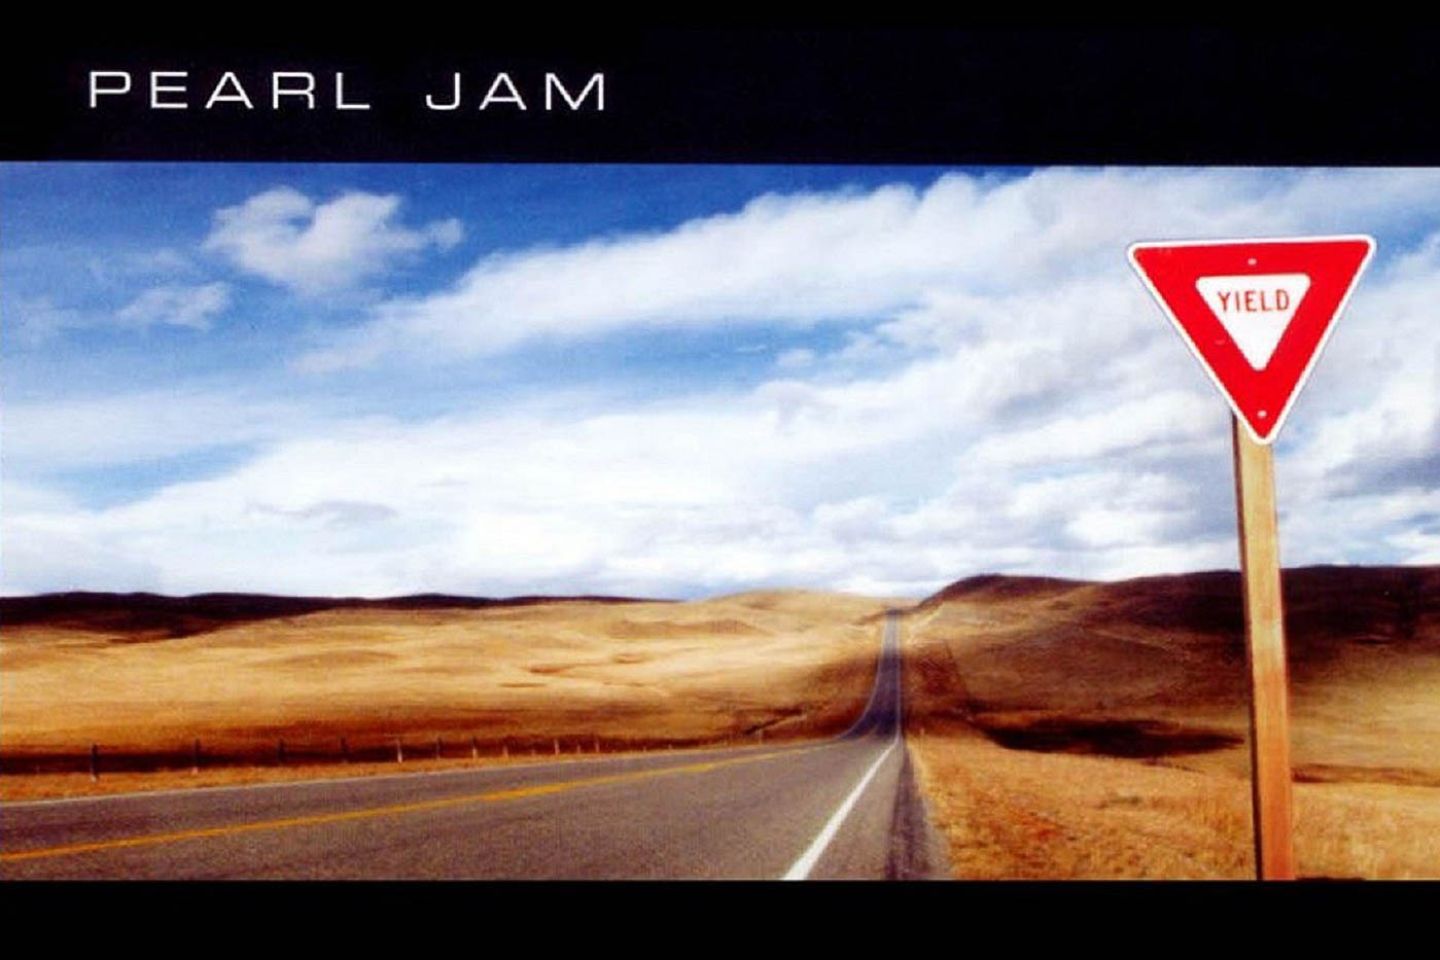 Pearl Jam “Yield” 25 anni dopo